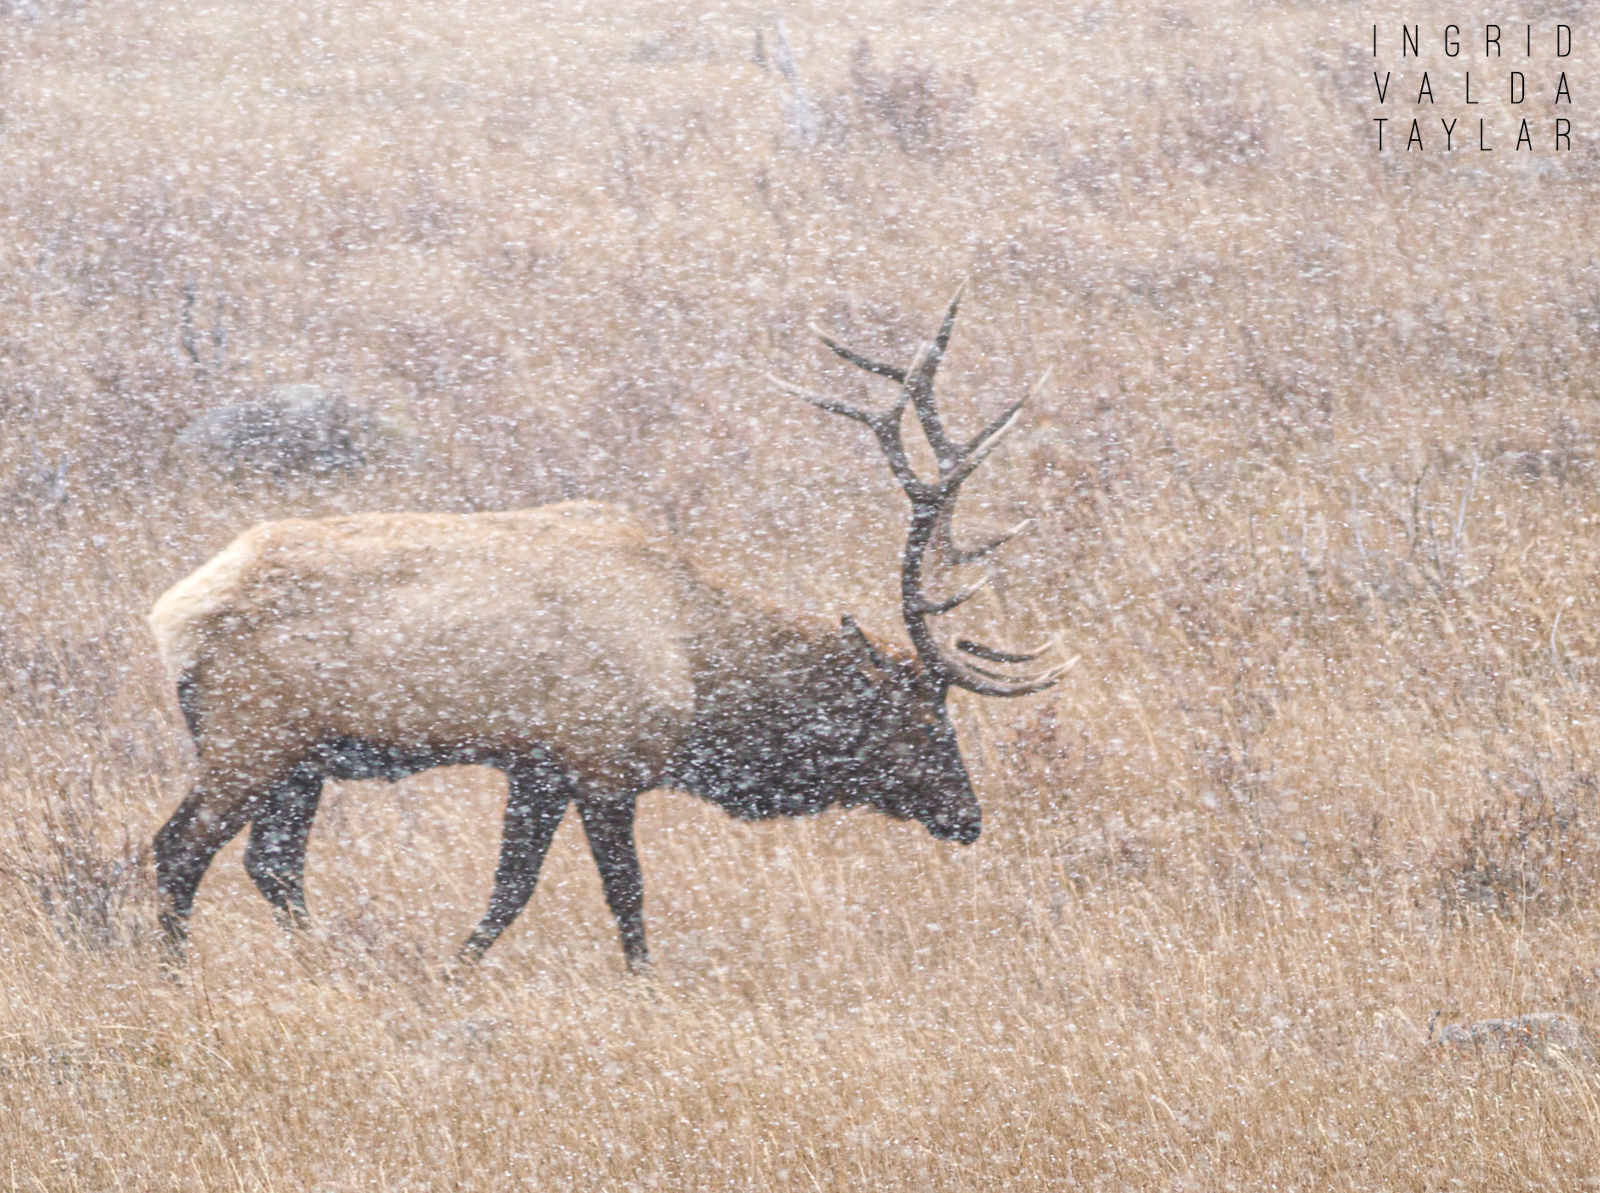 Bull Elk in a Snow Storm